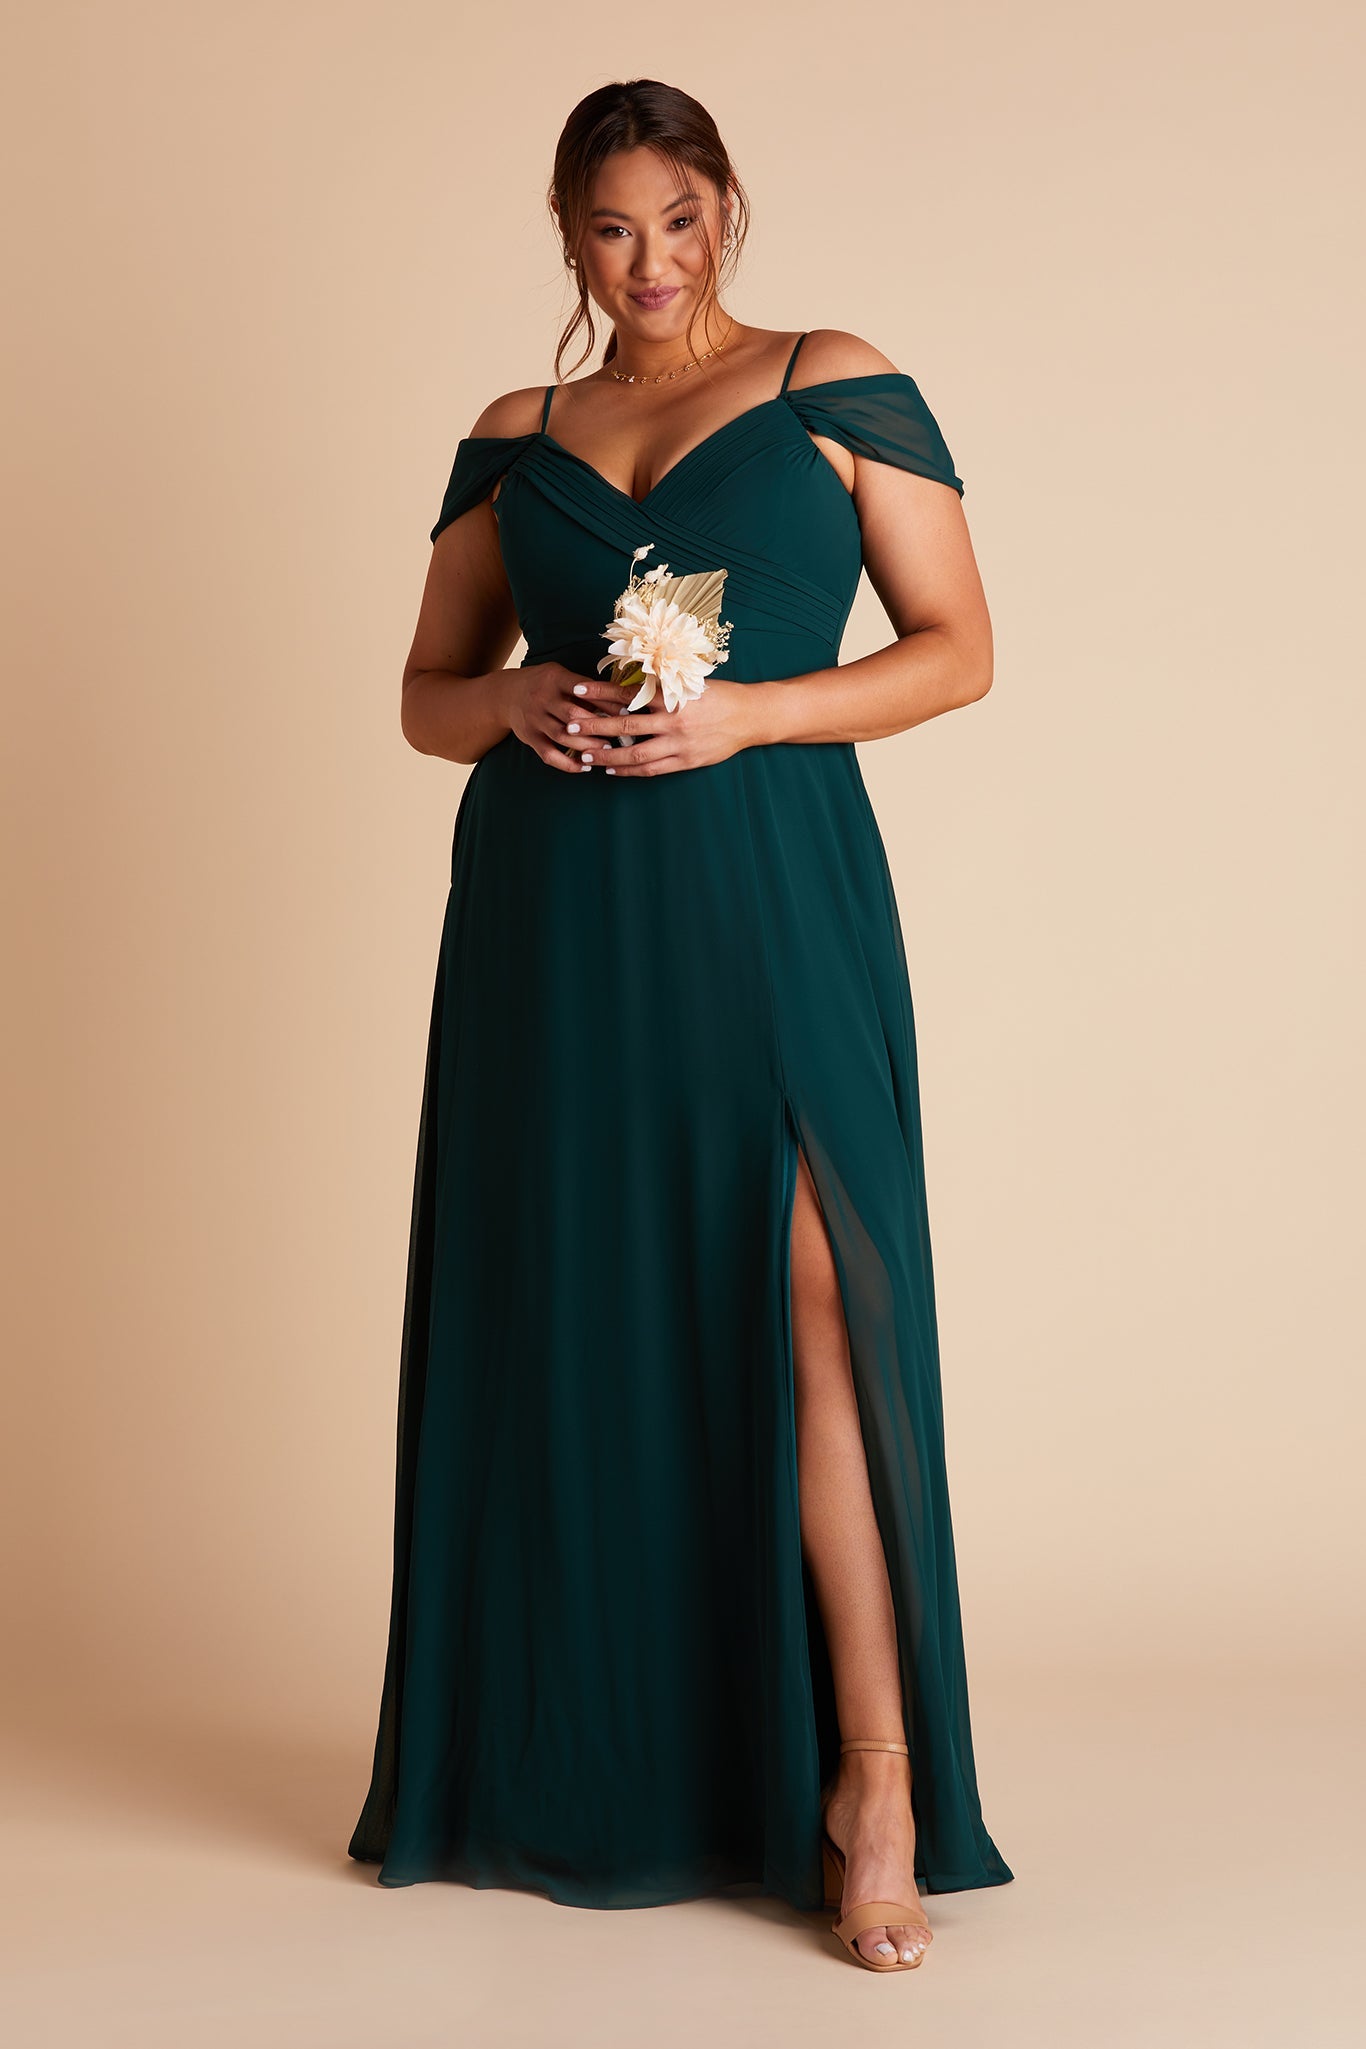 Stunning Emerald Green Dresses | For Party, Prom, Wedding | Goddiva